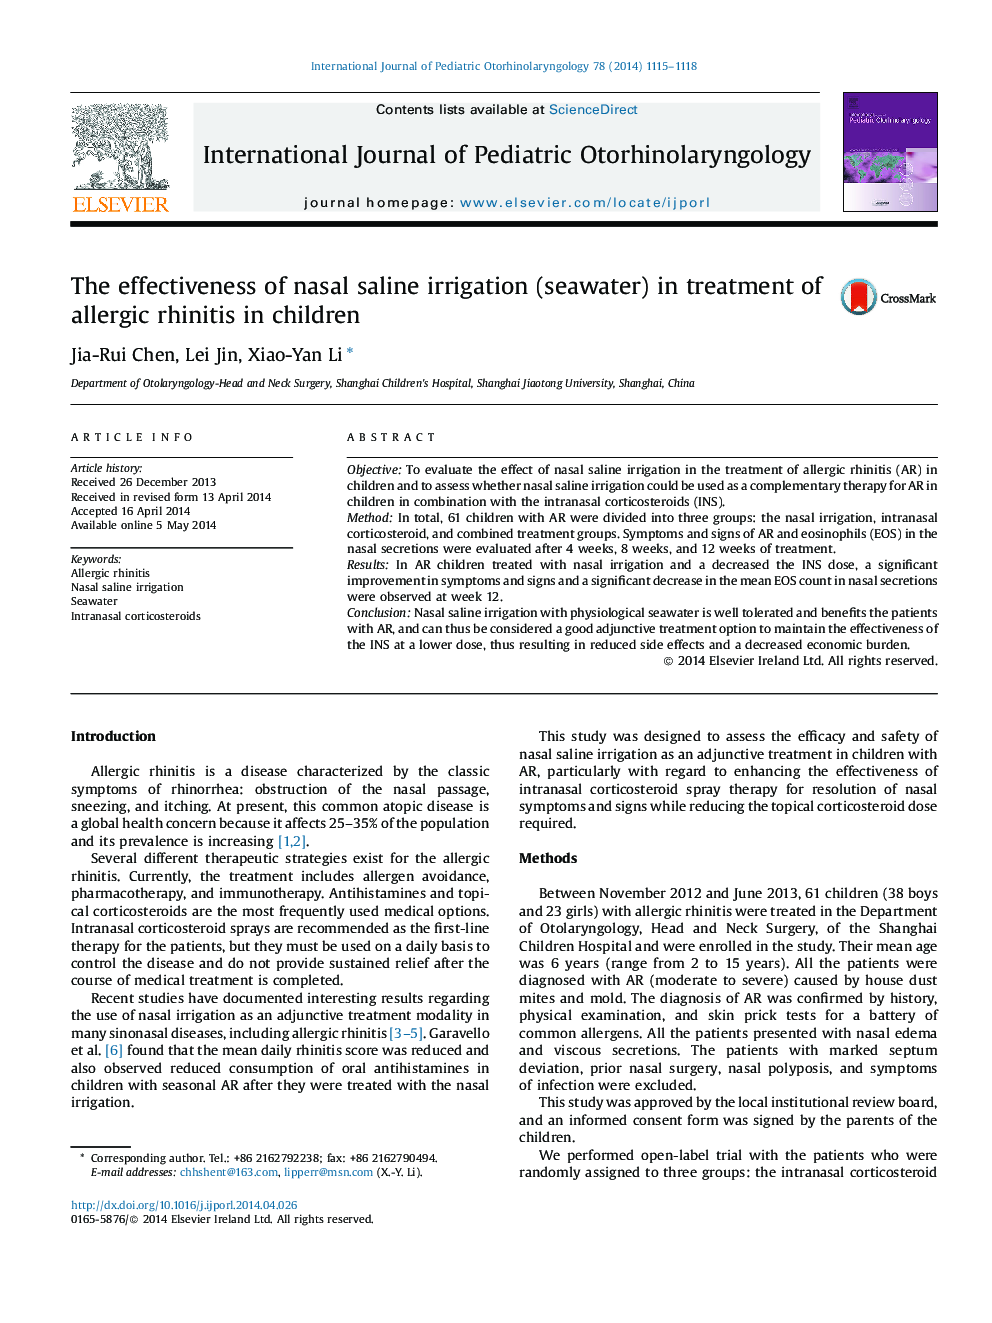 The effectiveness of nasal saline irrigation (seawater) in treatment of allergic rhinitis in children